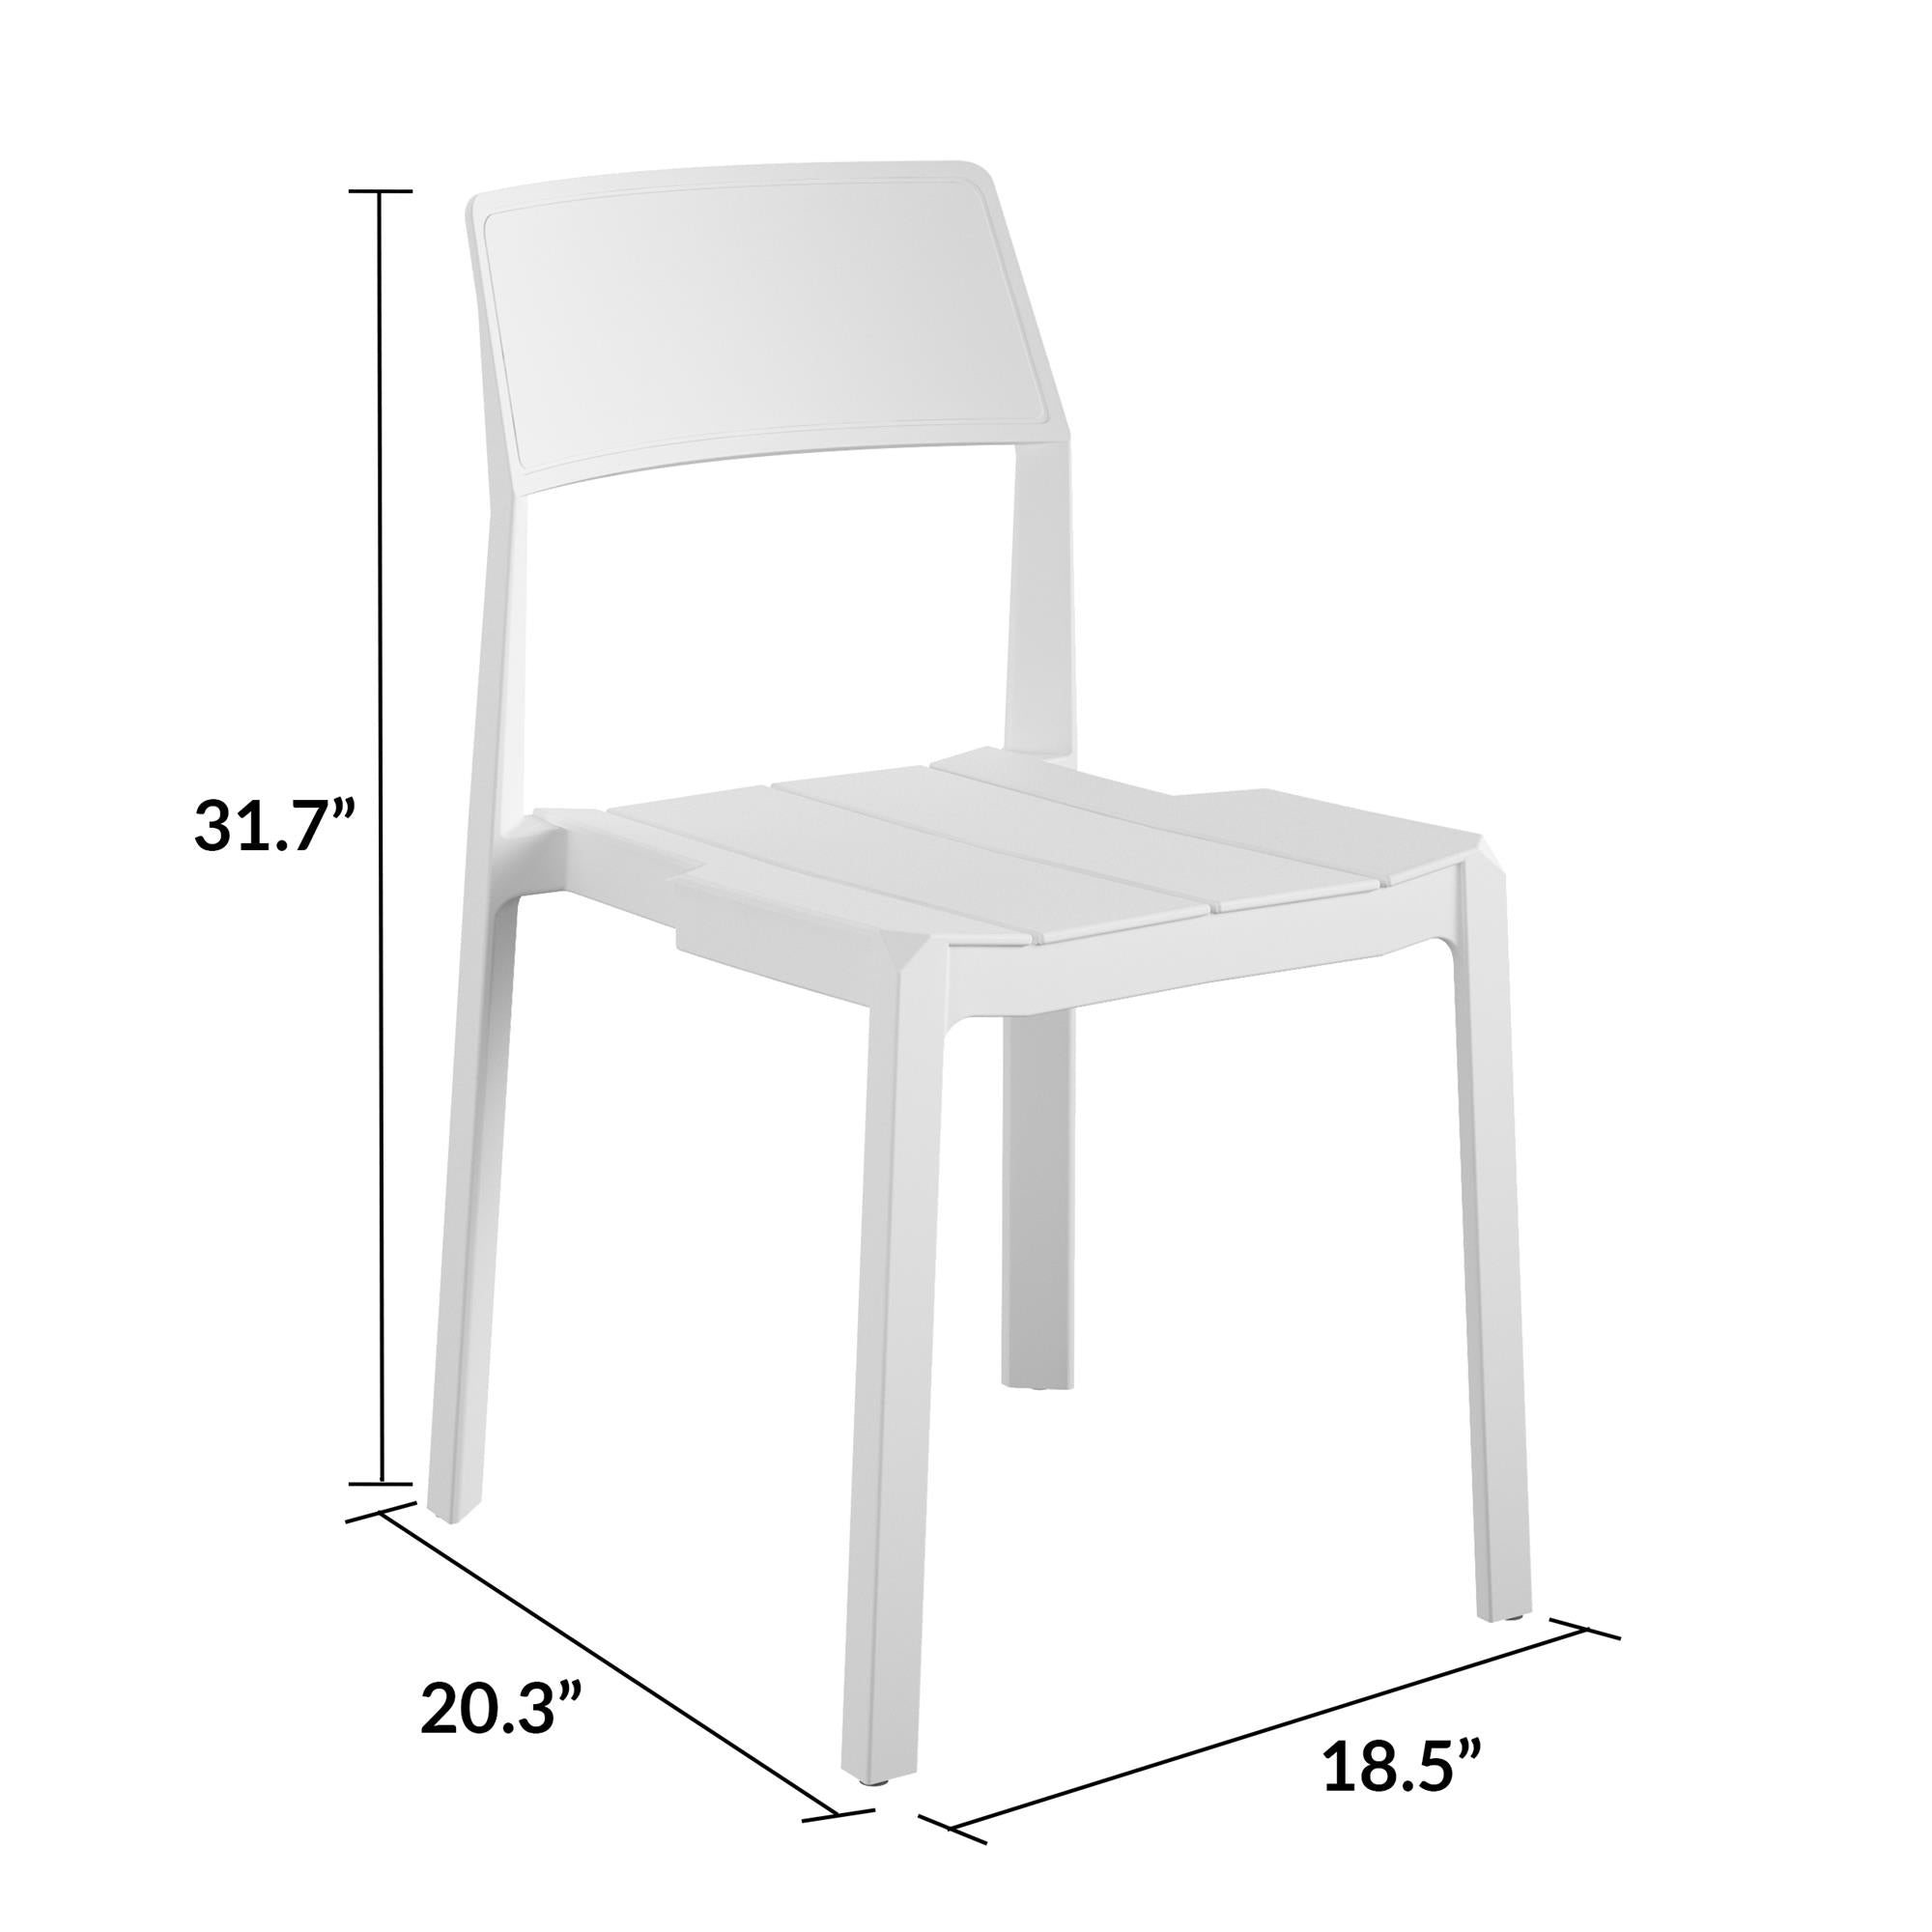 Chandler Stacking Chairs (Set of 2) – The Novogratz